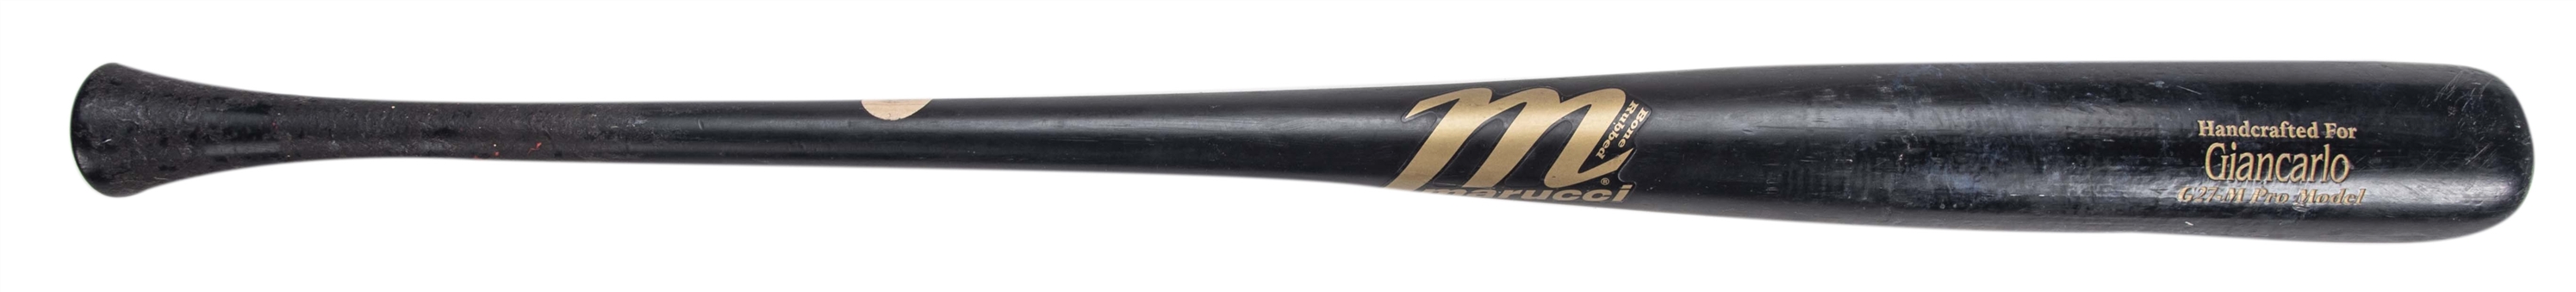 2016 Giancarlo Stanton Miami Marlins Game Used Marucci G27-M Model Bat (PSA/DNA GU 10)